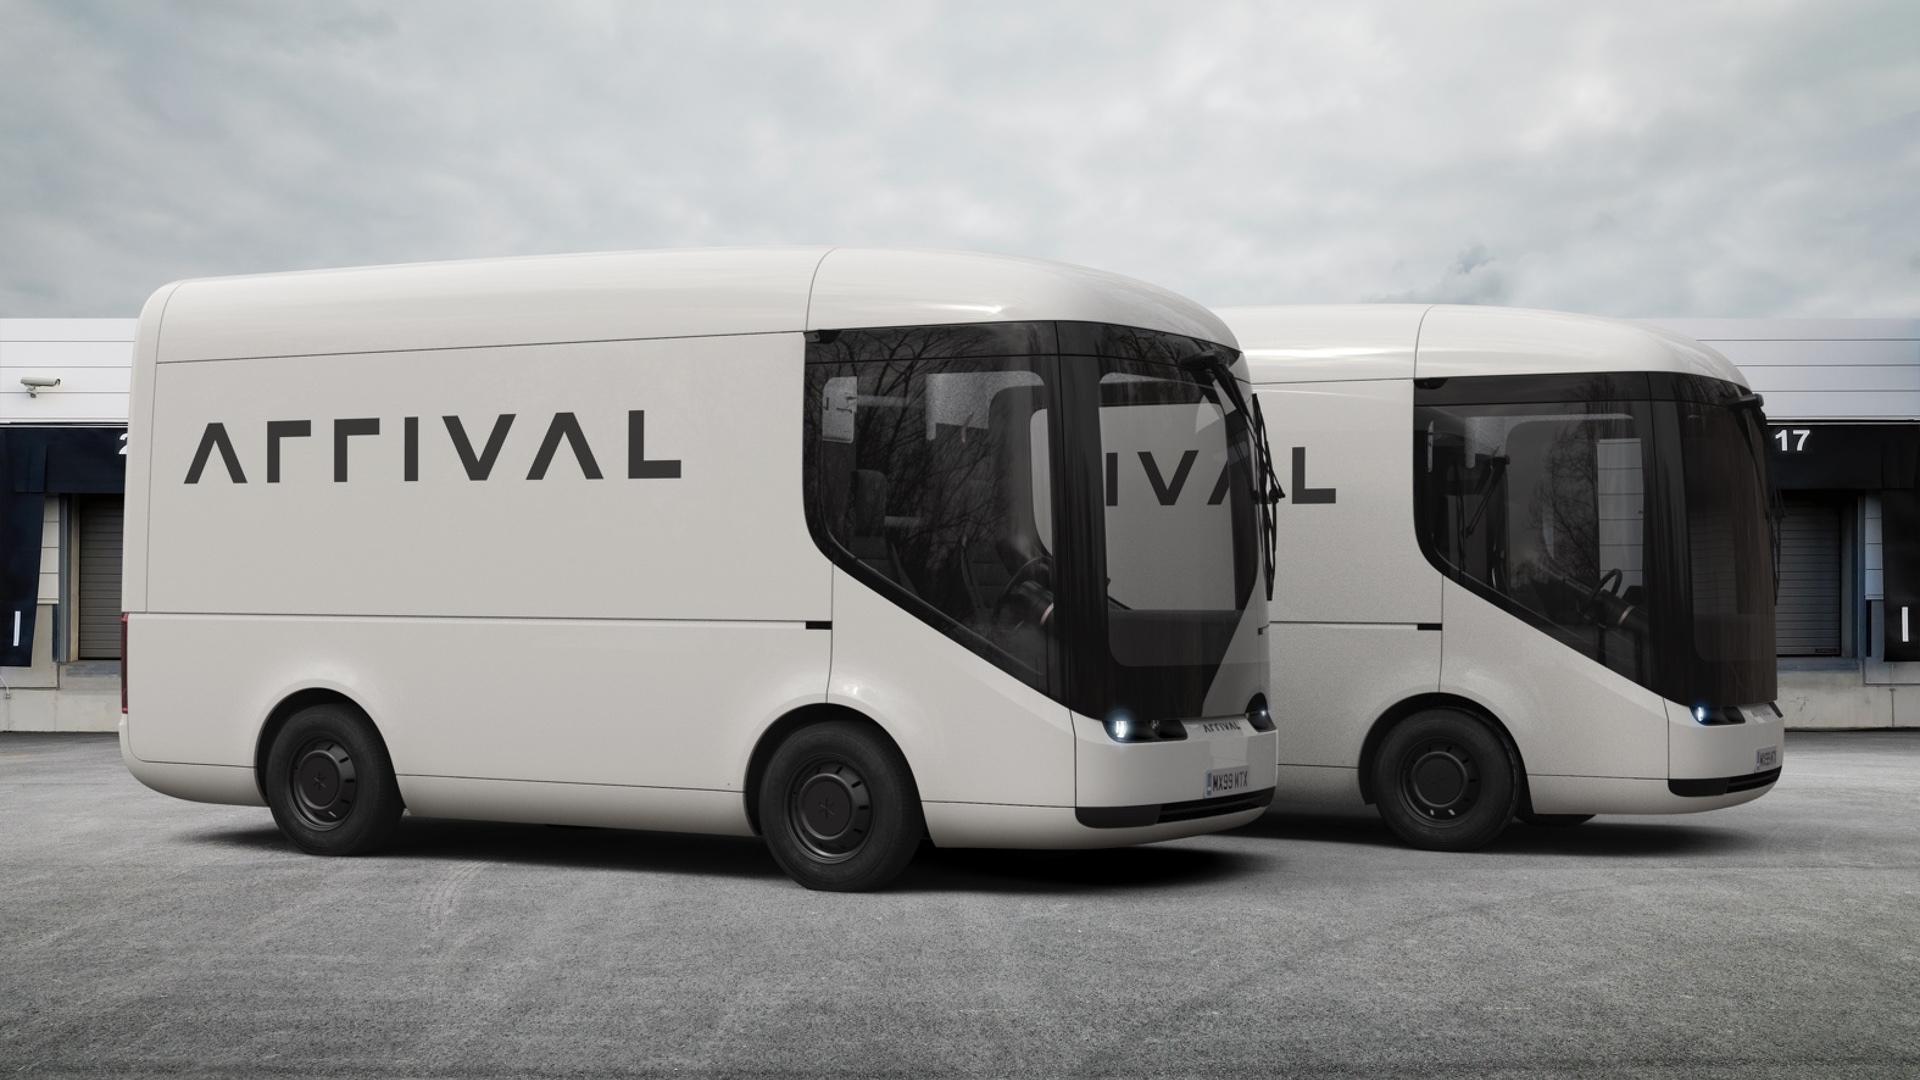 Arrival's electric vans